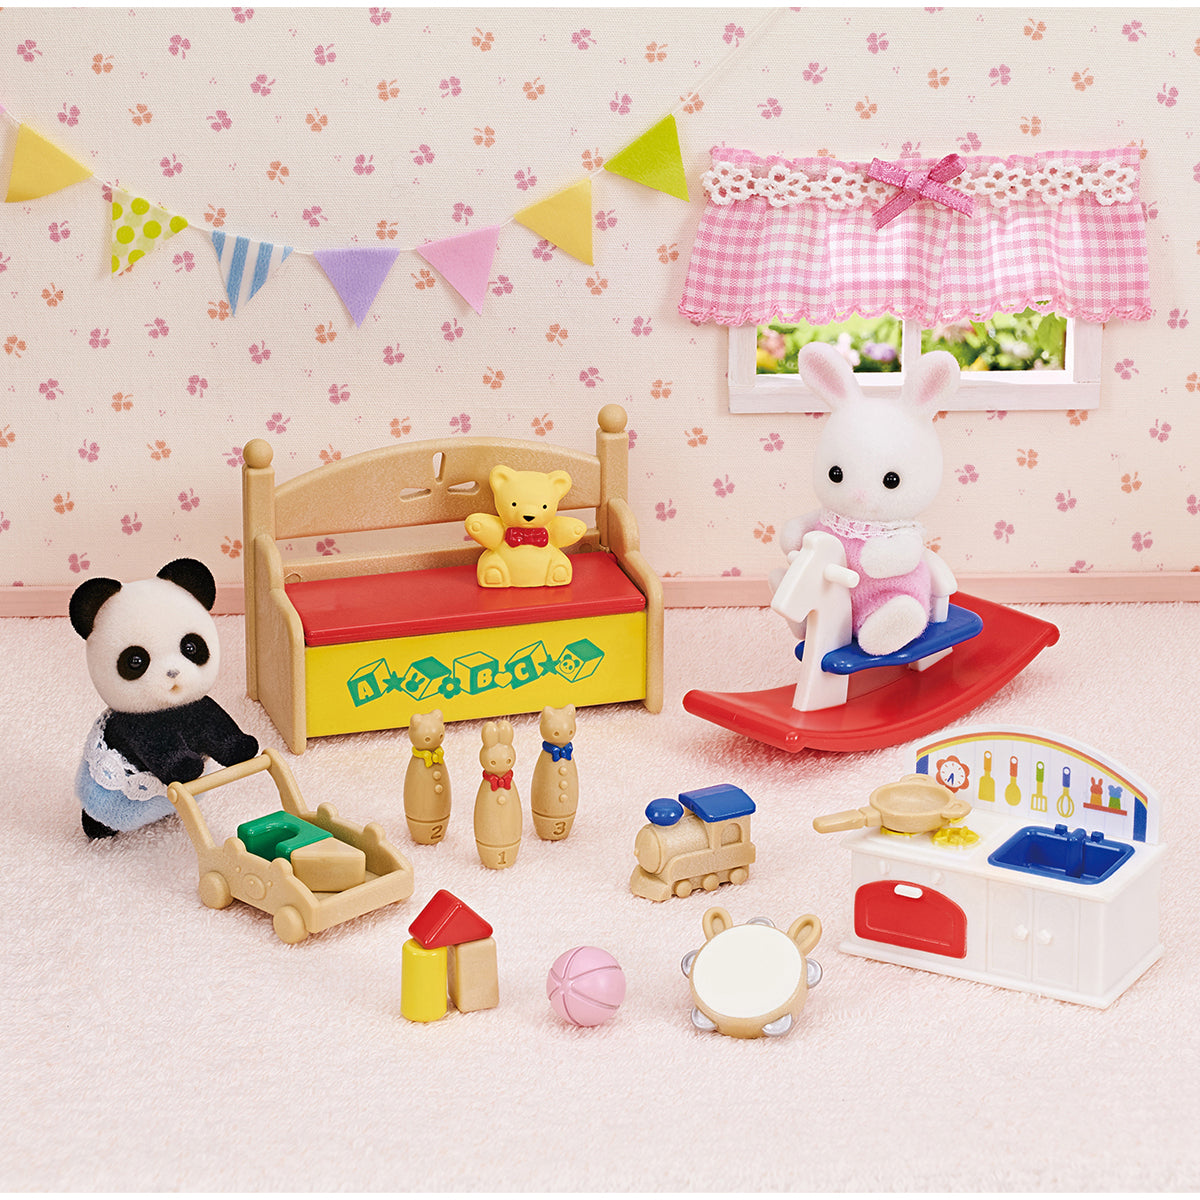 Sylvanians Babys Toy Box Snow Rabbit & Baby Panda